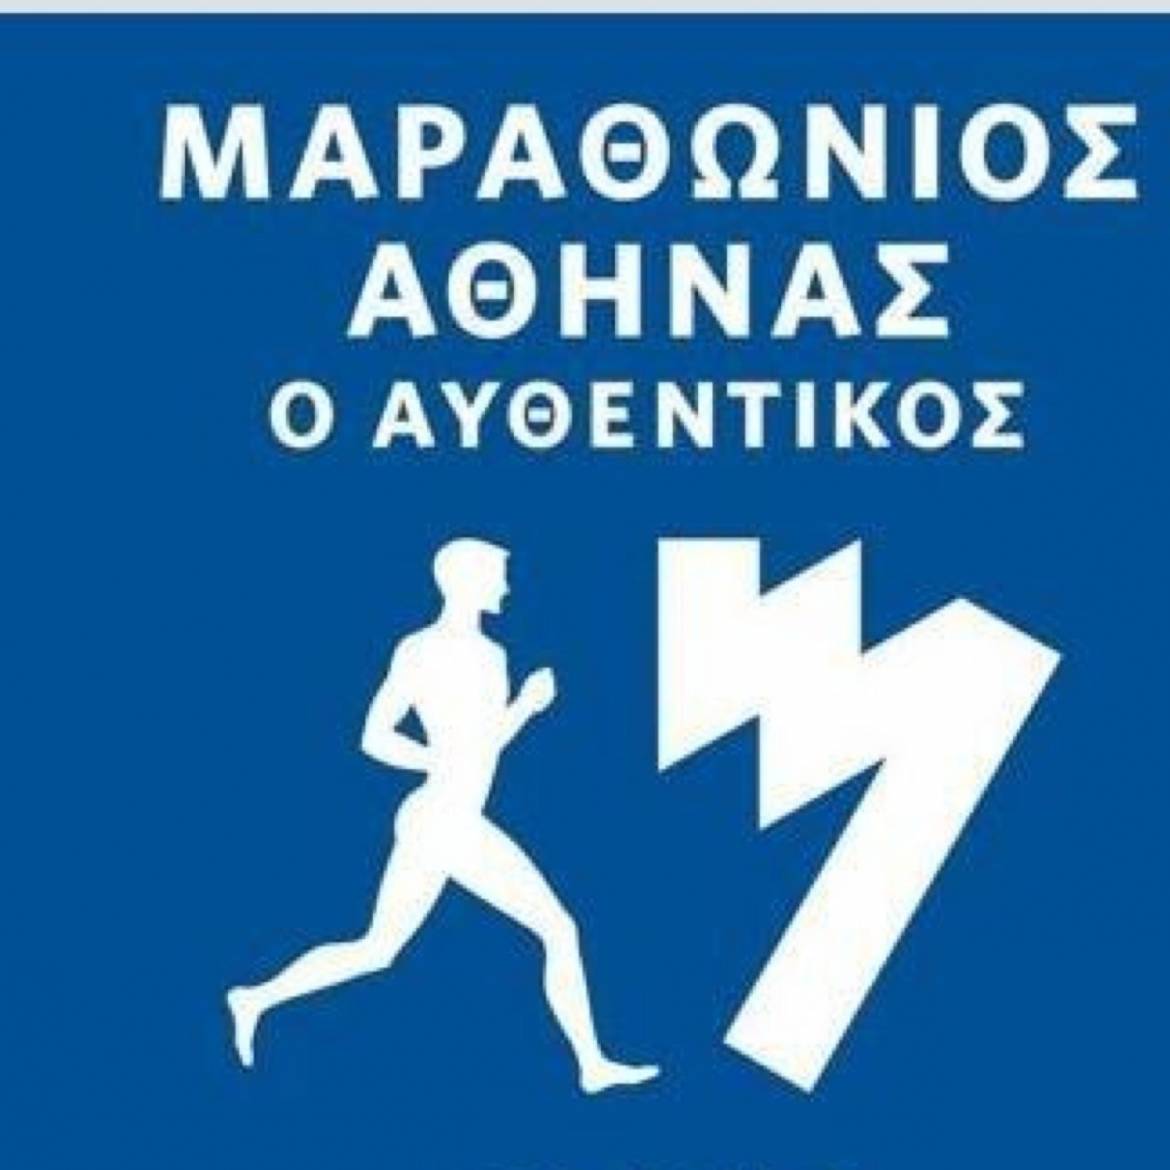 Marathonios_2018_05.jpg